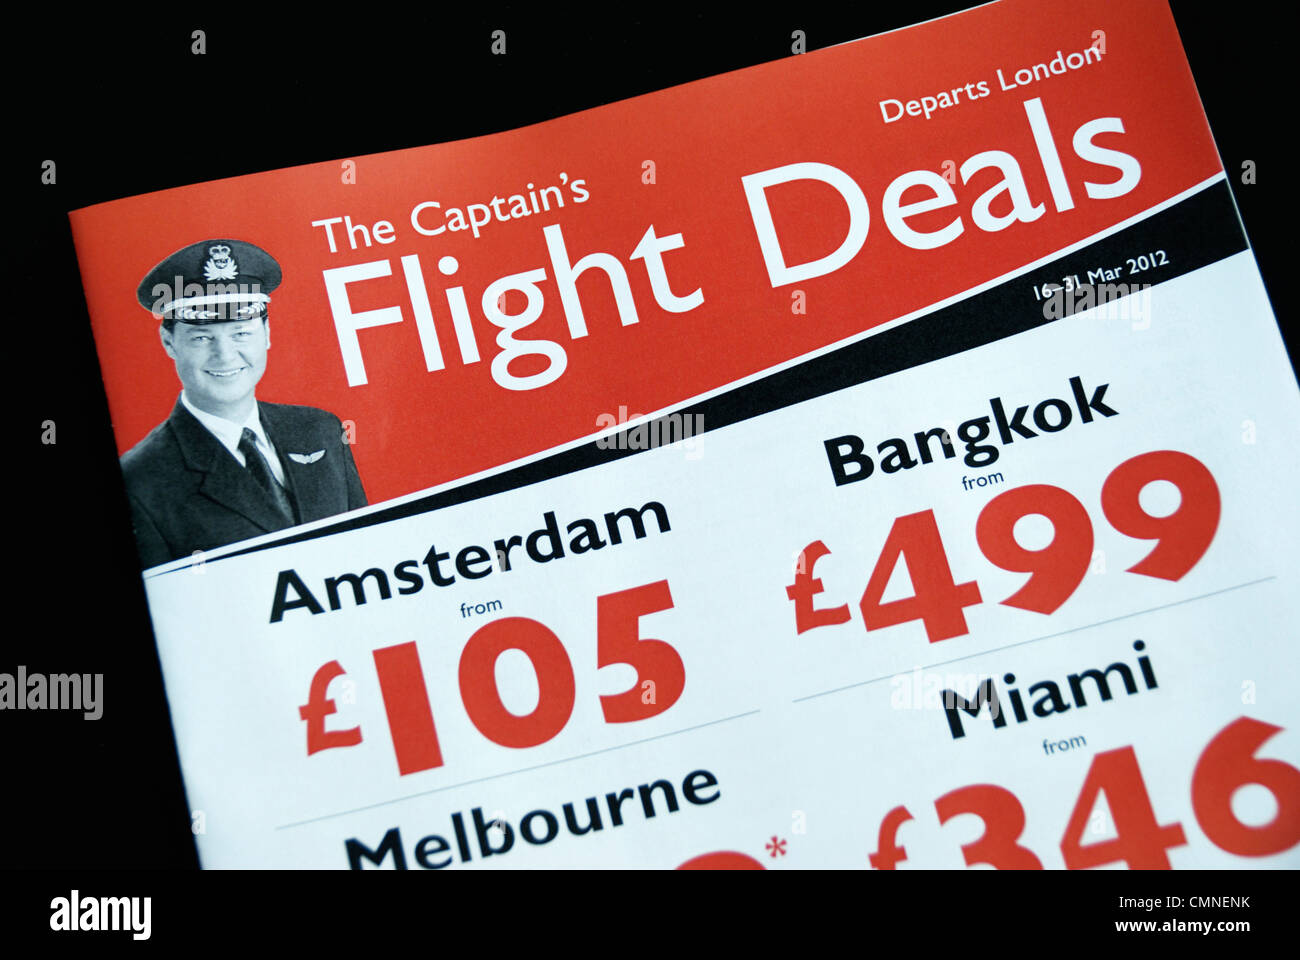 Air travel flight deals leaflet Stock Photo